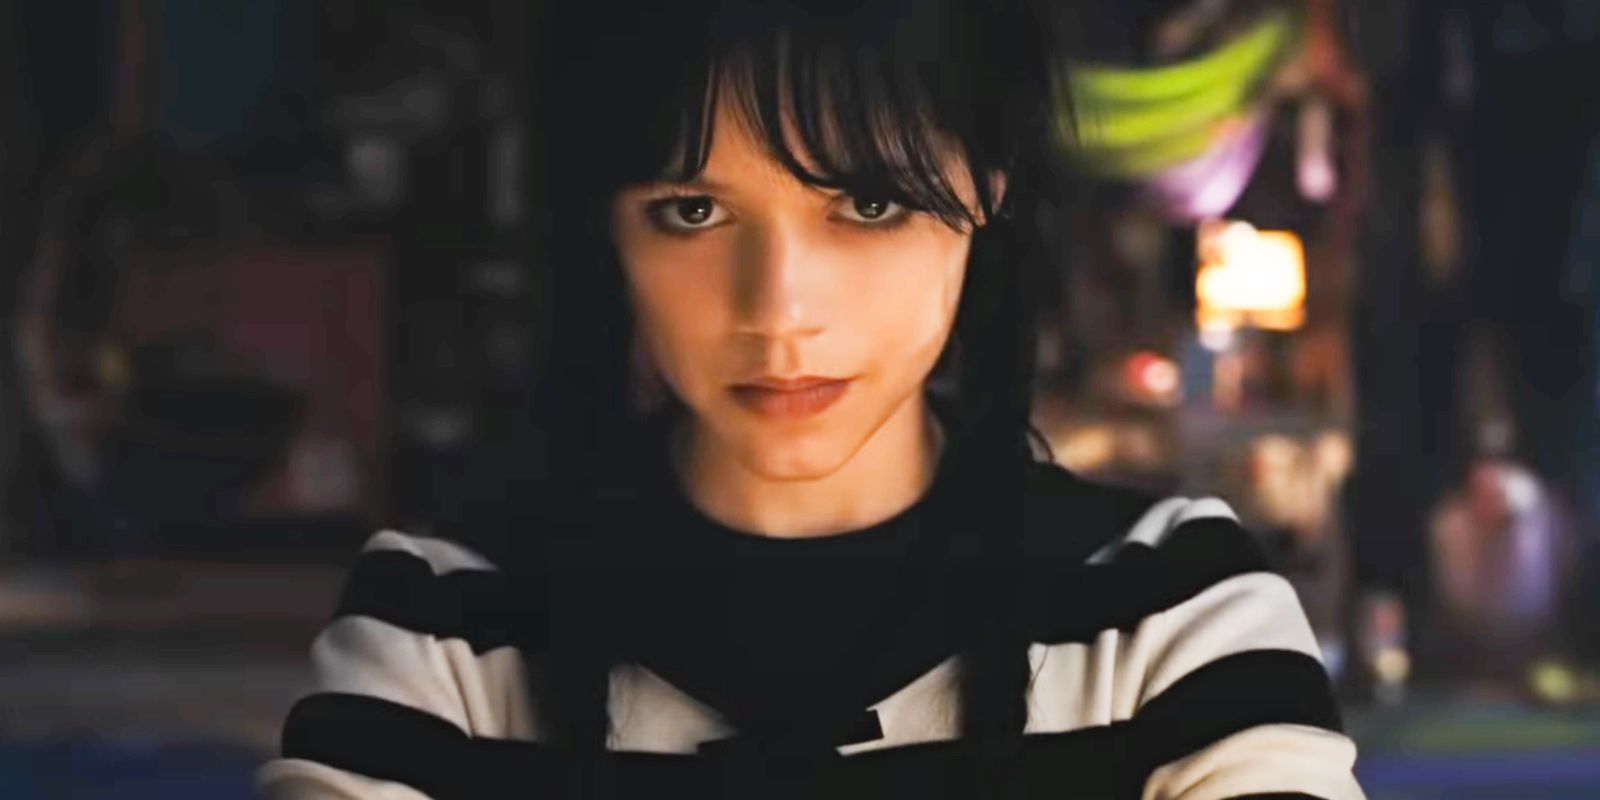 Jenna Ortega as Wednesday Addams wearing a striped shirt and smirking